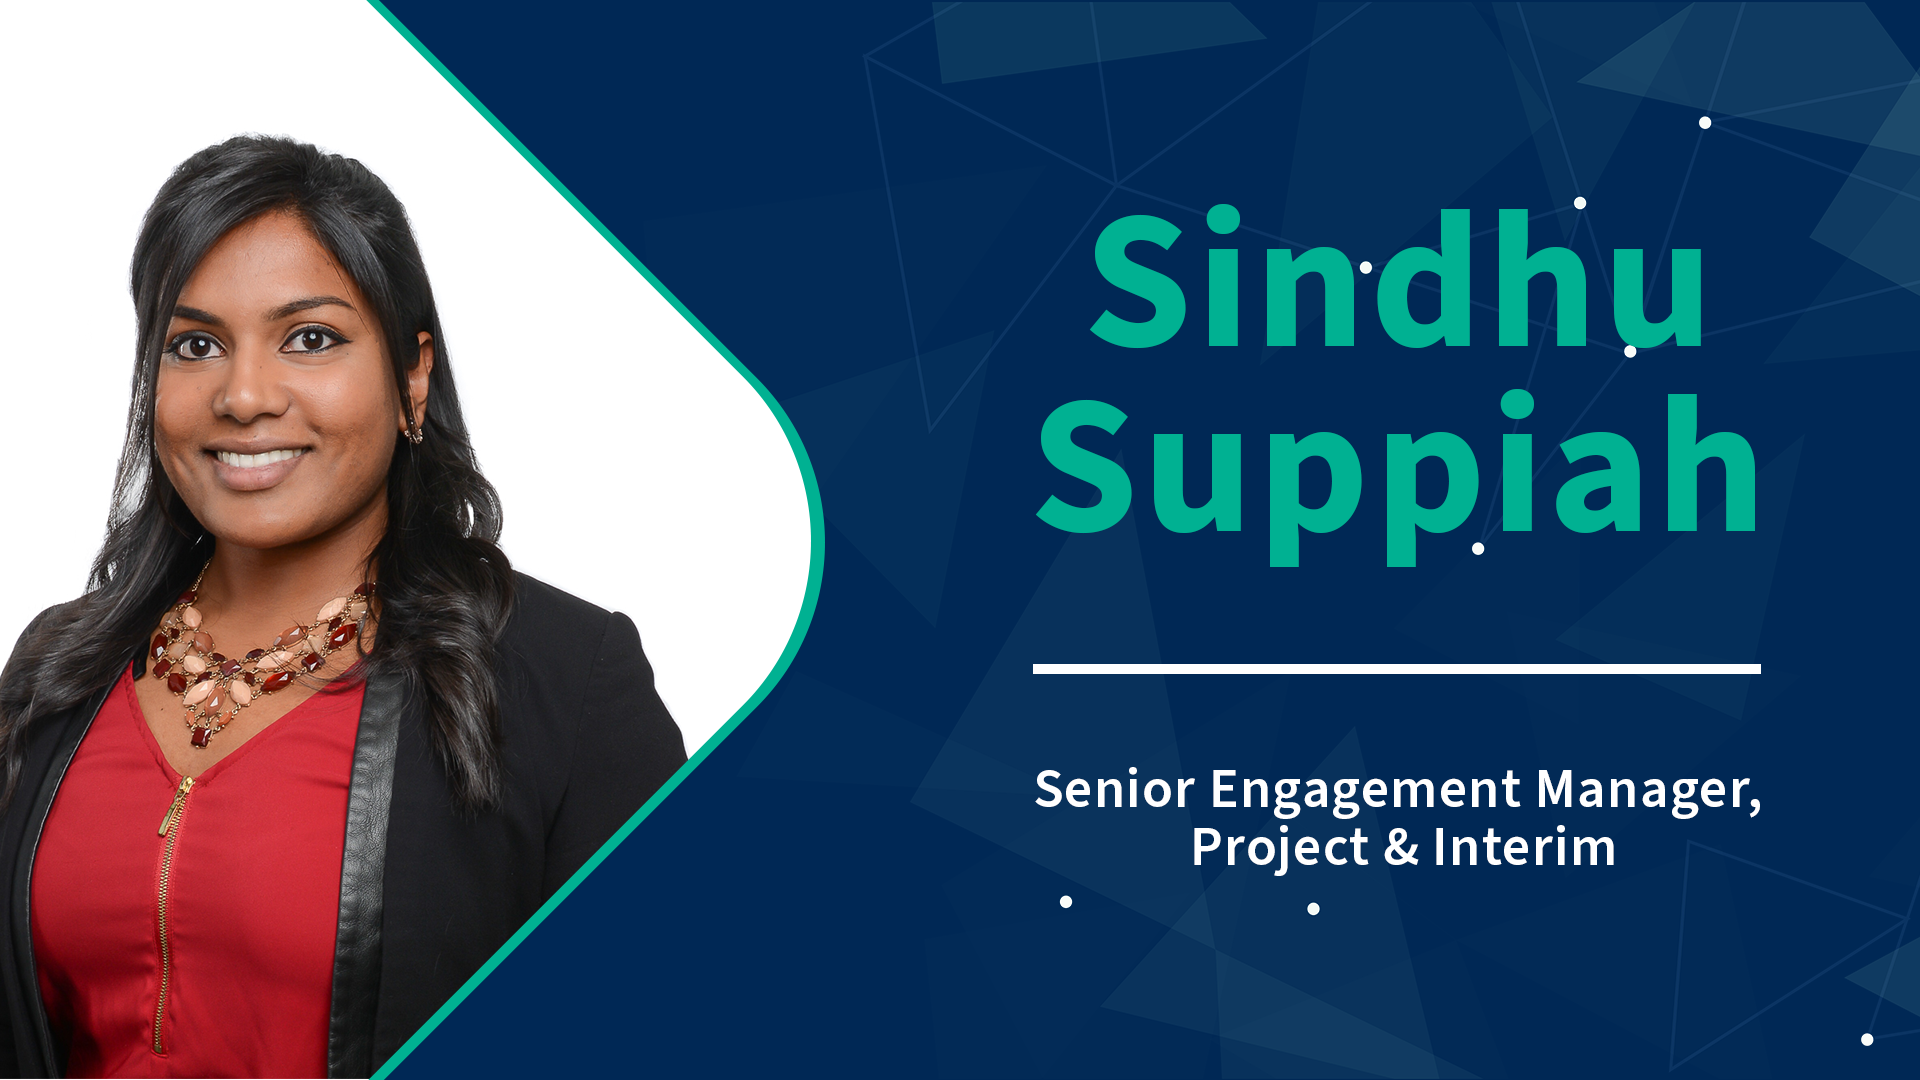 Sindhu Suppiah Senior Engagement Manager Project & Interim